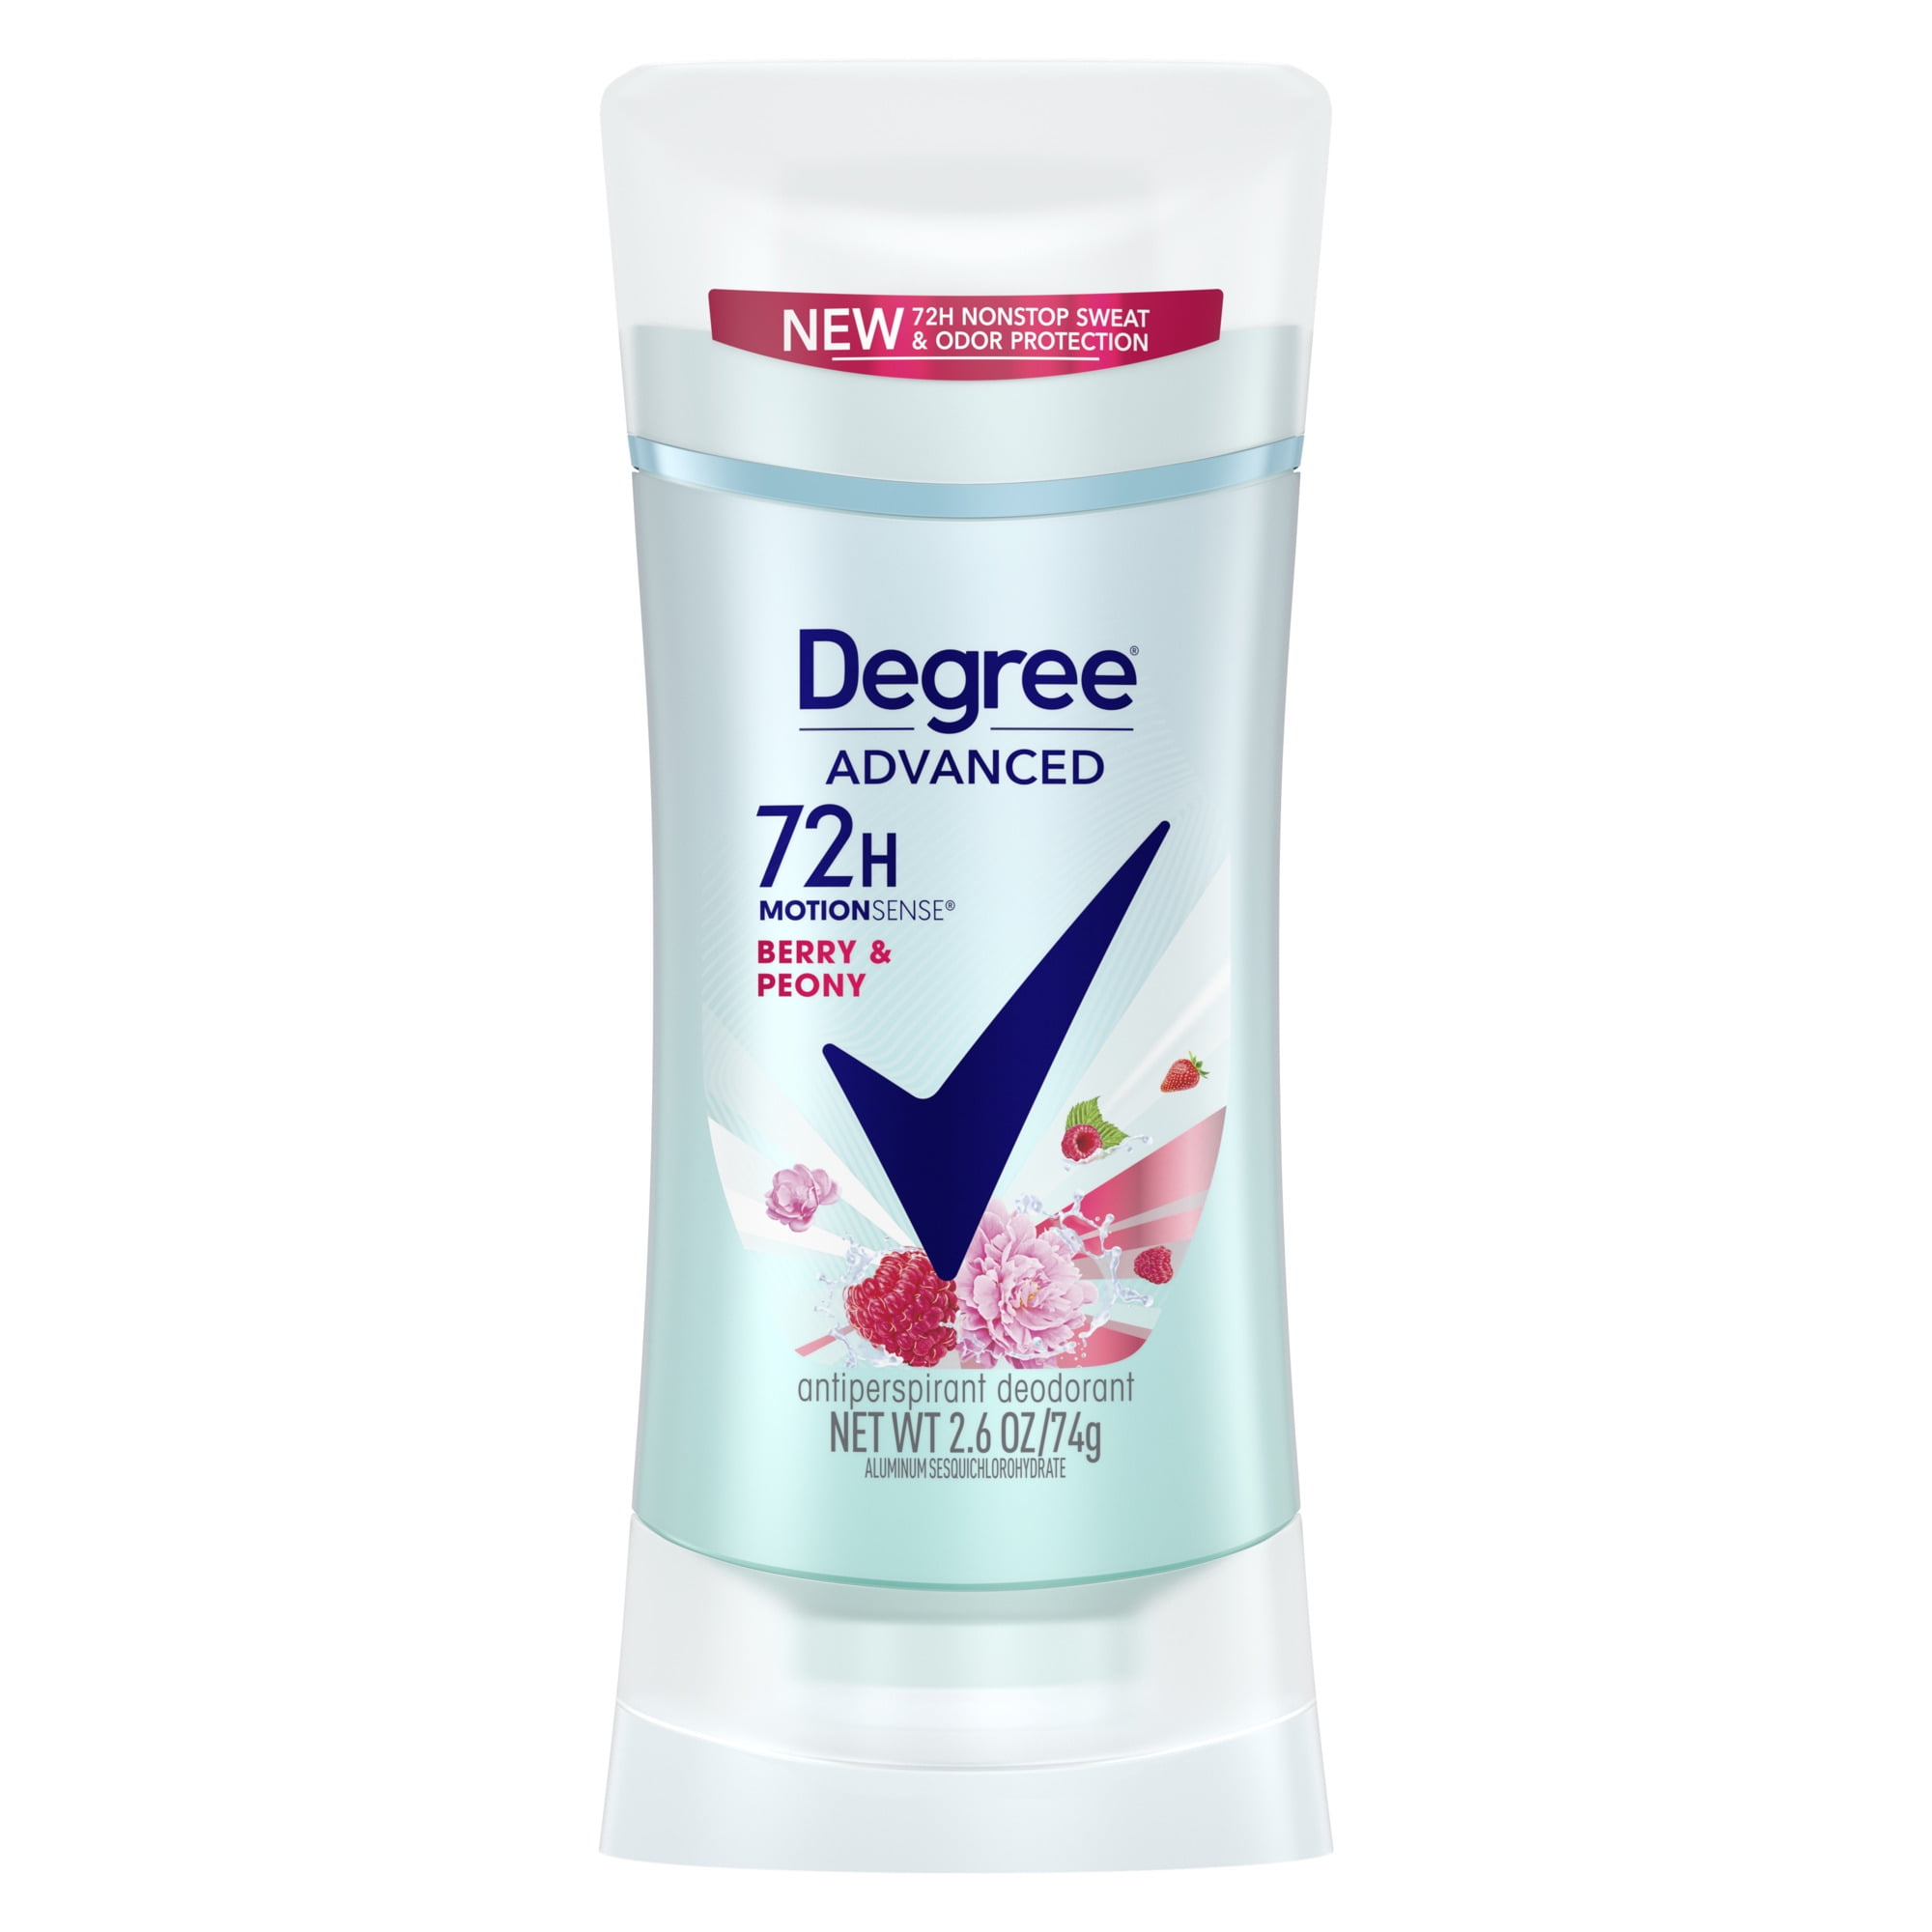 Deodorant & Antiperspirant - Miazone